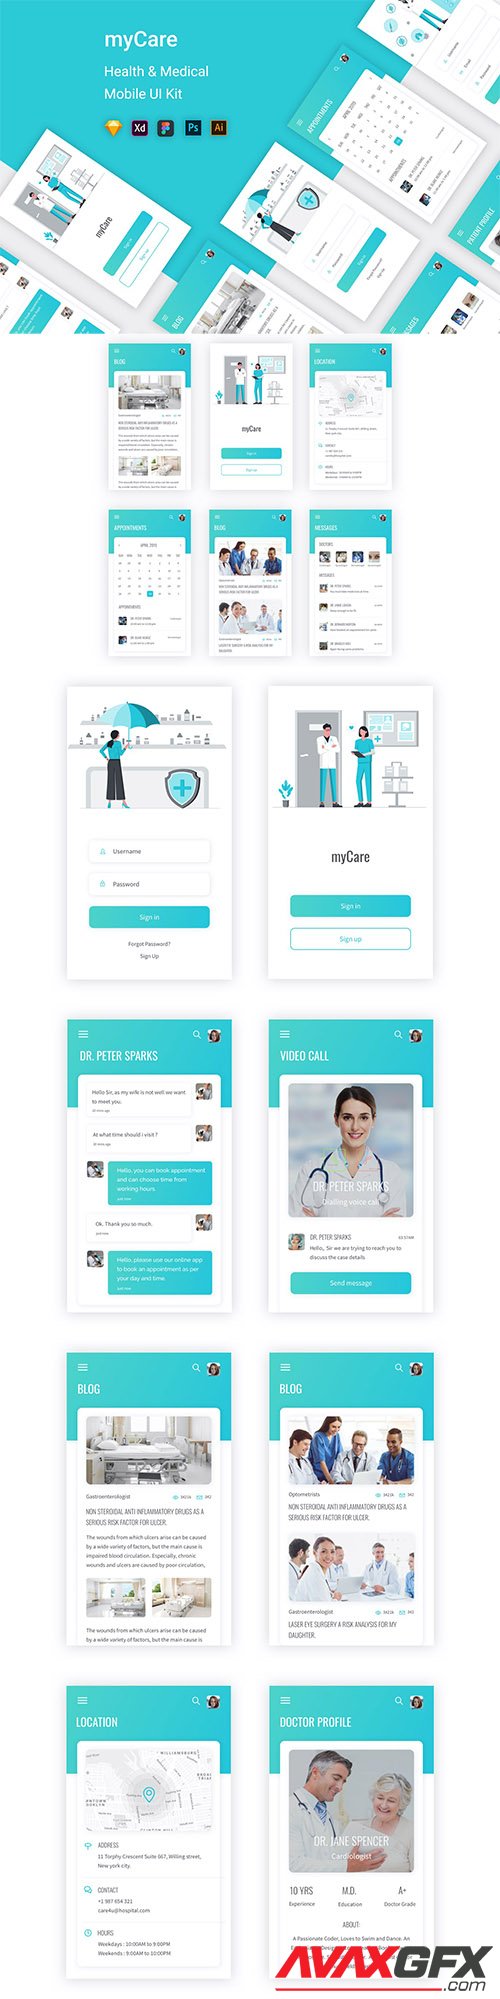 myCare - Health & Medical Mobile App